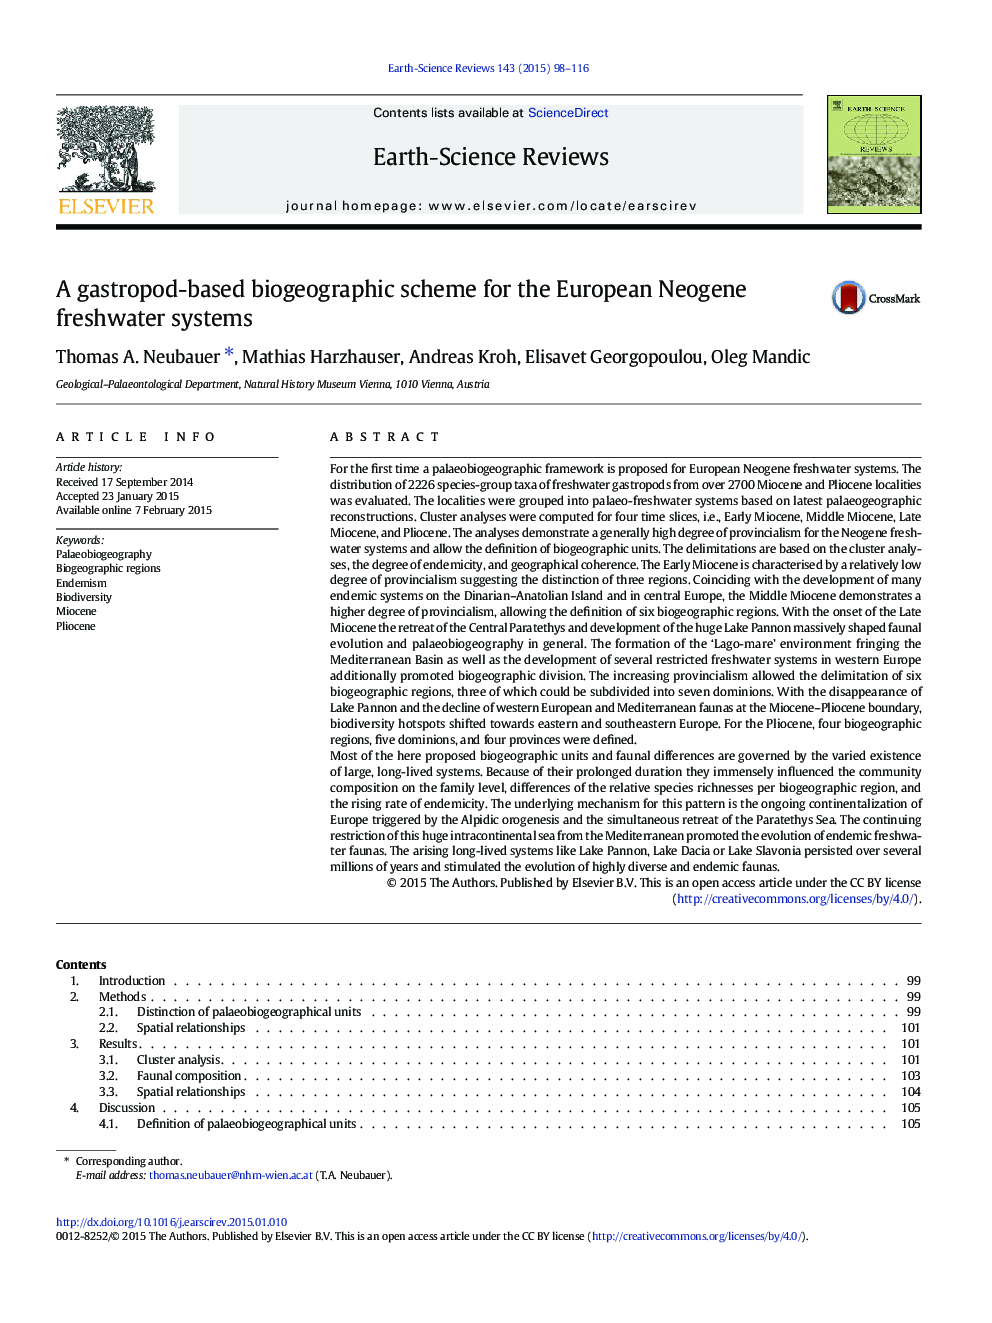 A gastropod-based biogeographic scheme for the European Neogene freshwater systems